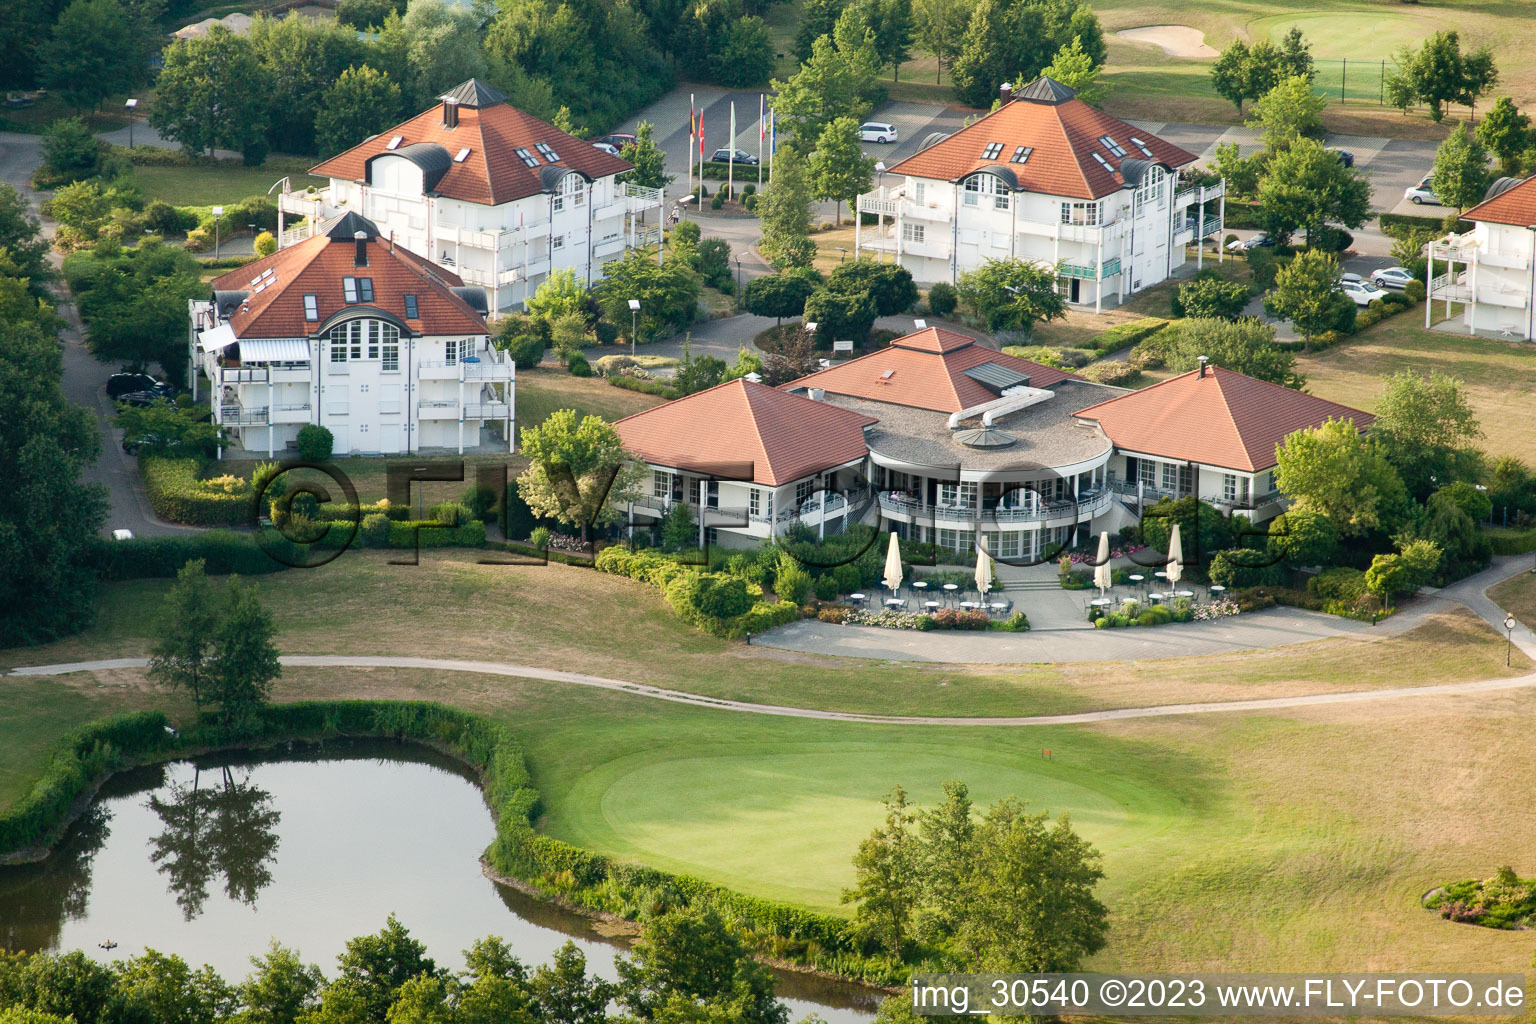 Oblique view of Golf club Soufflenheim Baden-Baden in Soufflenheim in the state Bas-Rhin, France